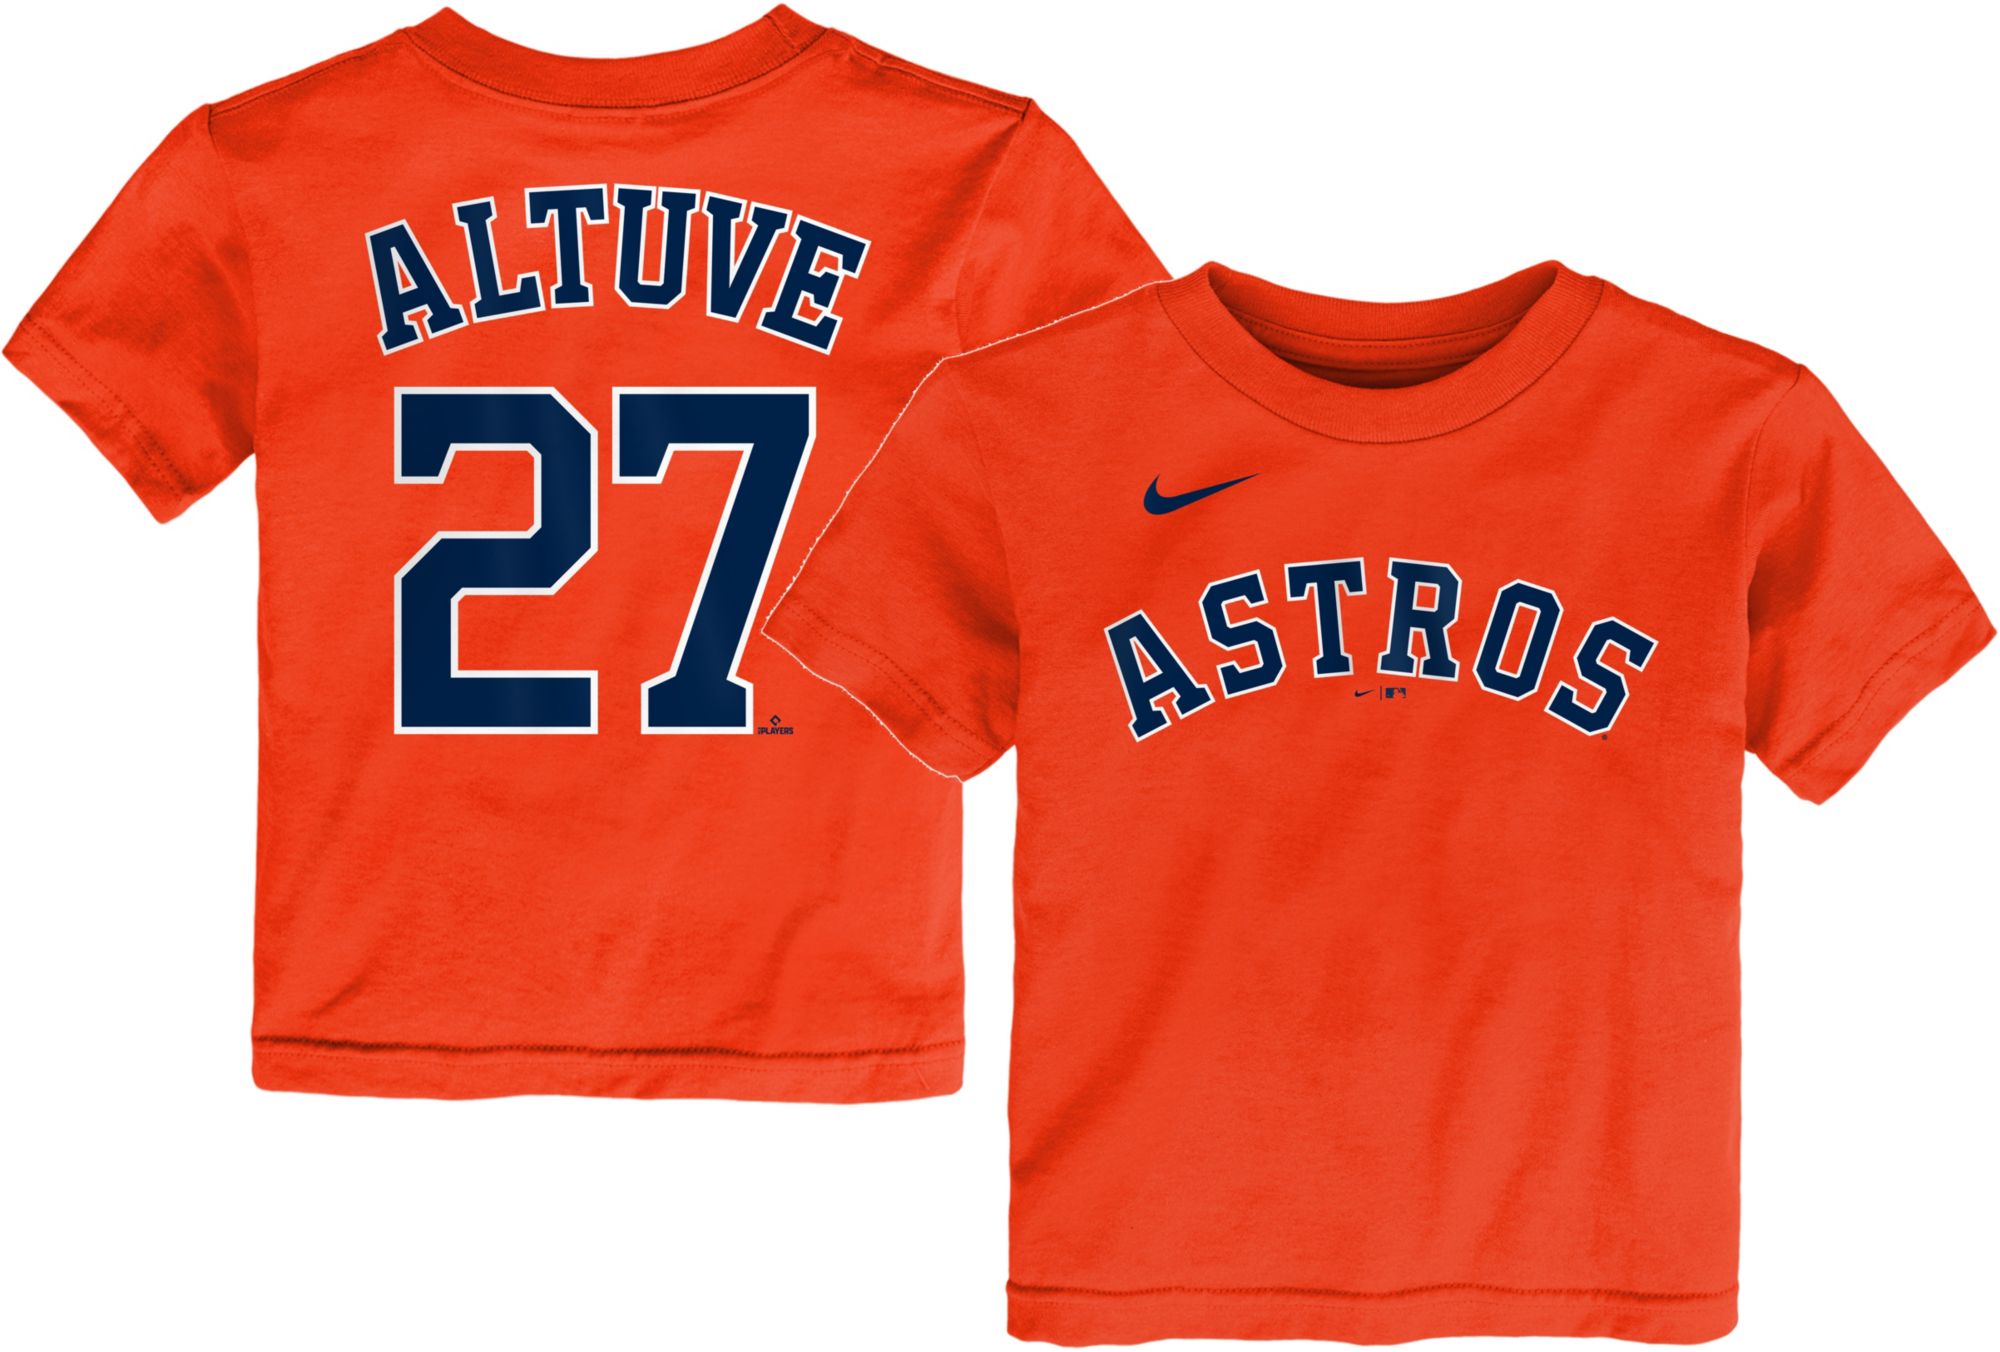 Nike Men's Houston Astros Jose Altuve #27 Orange T-Shirt